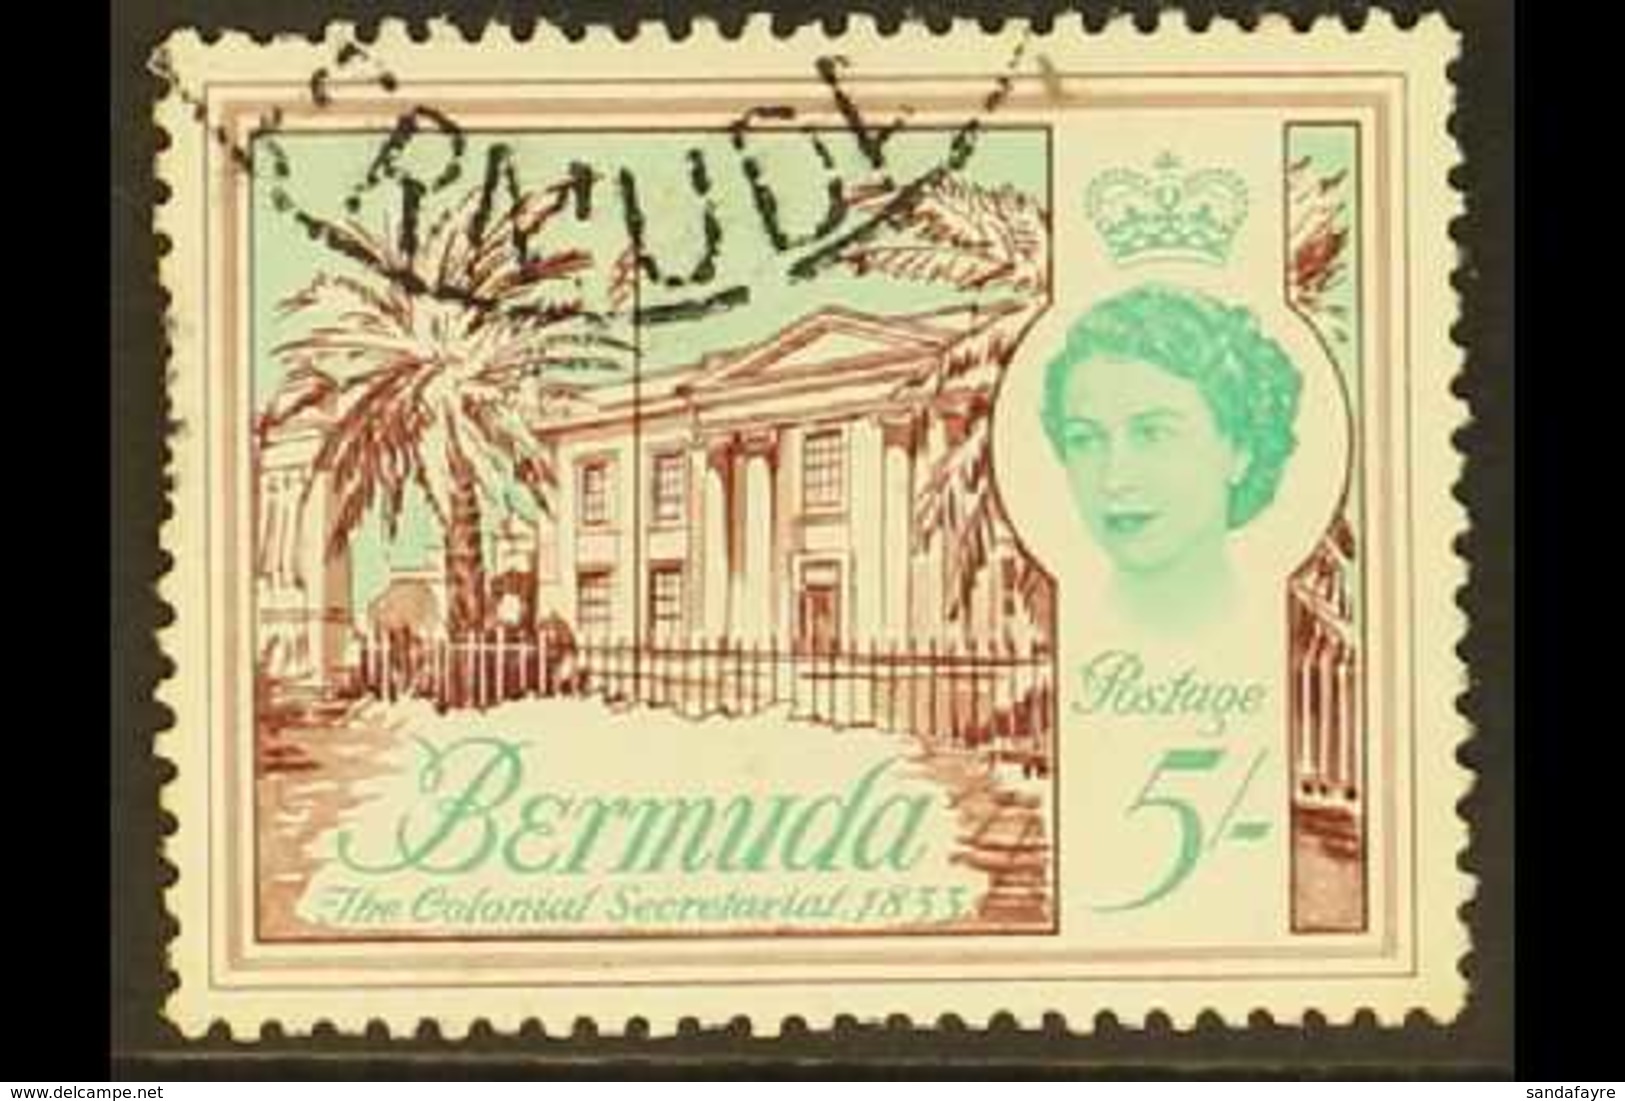 1962 5s Brown Purple And Blue Green, Colonial Secretariat, Variety "wmk Inverted", SG 177w, Used. Scarce Stamp, Perfs Ro - Bermuda